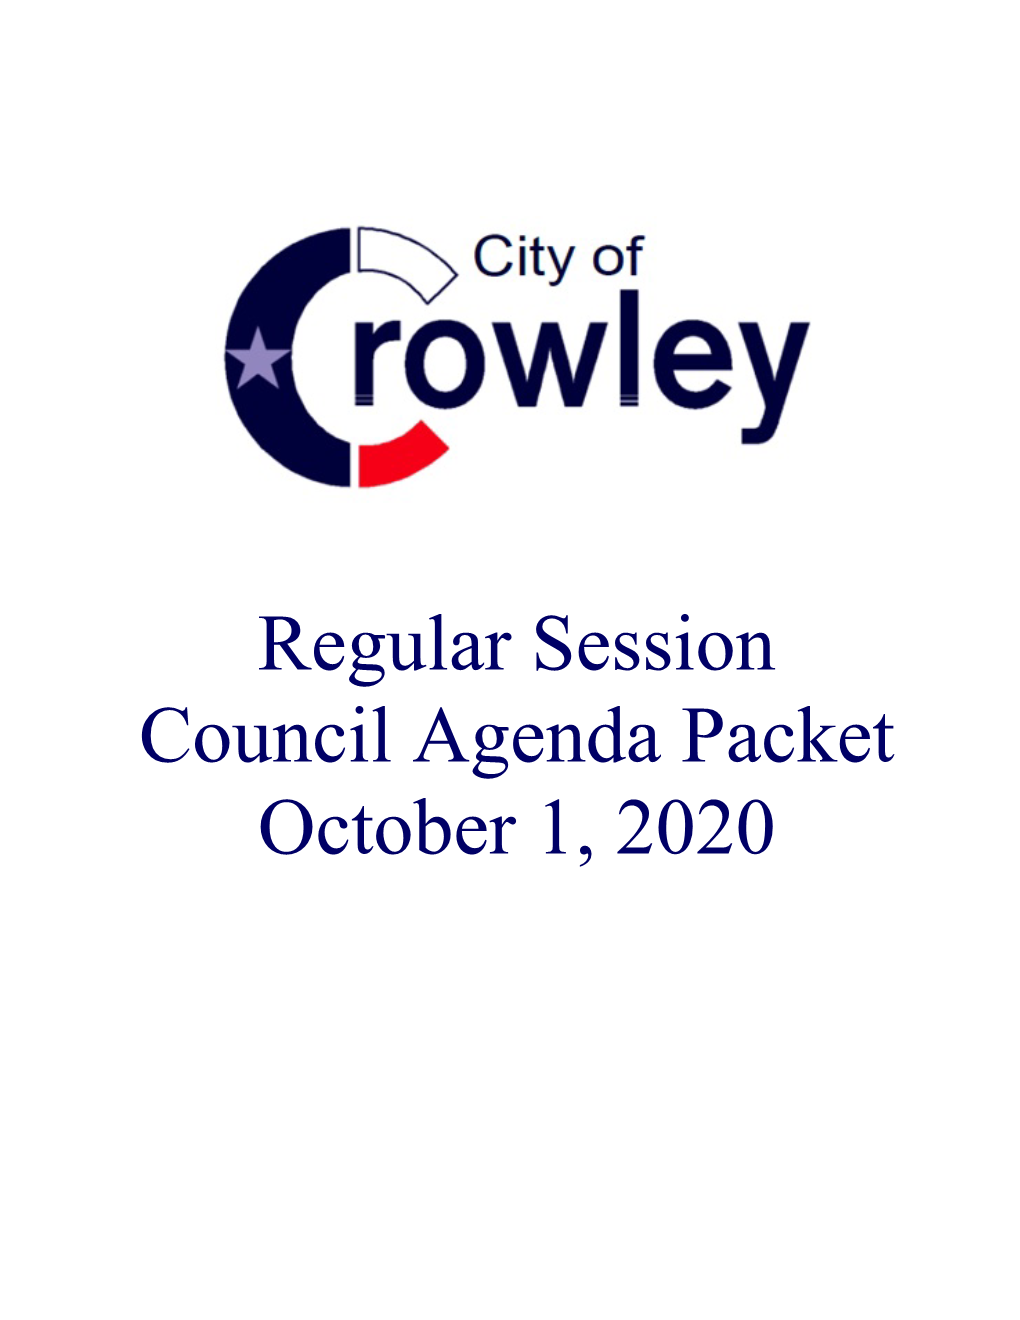 Regular Session Council Agenda Packet October 1, 2020